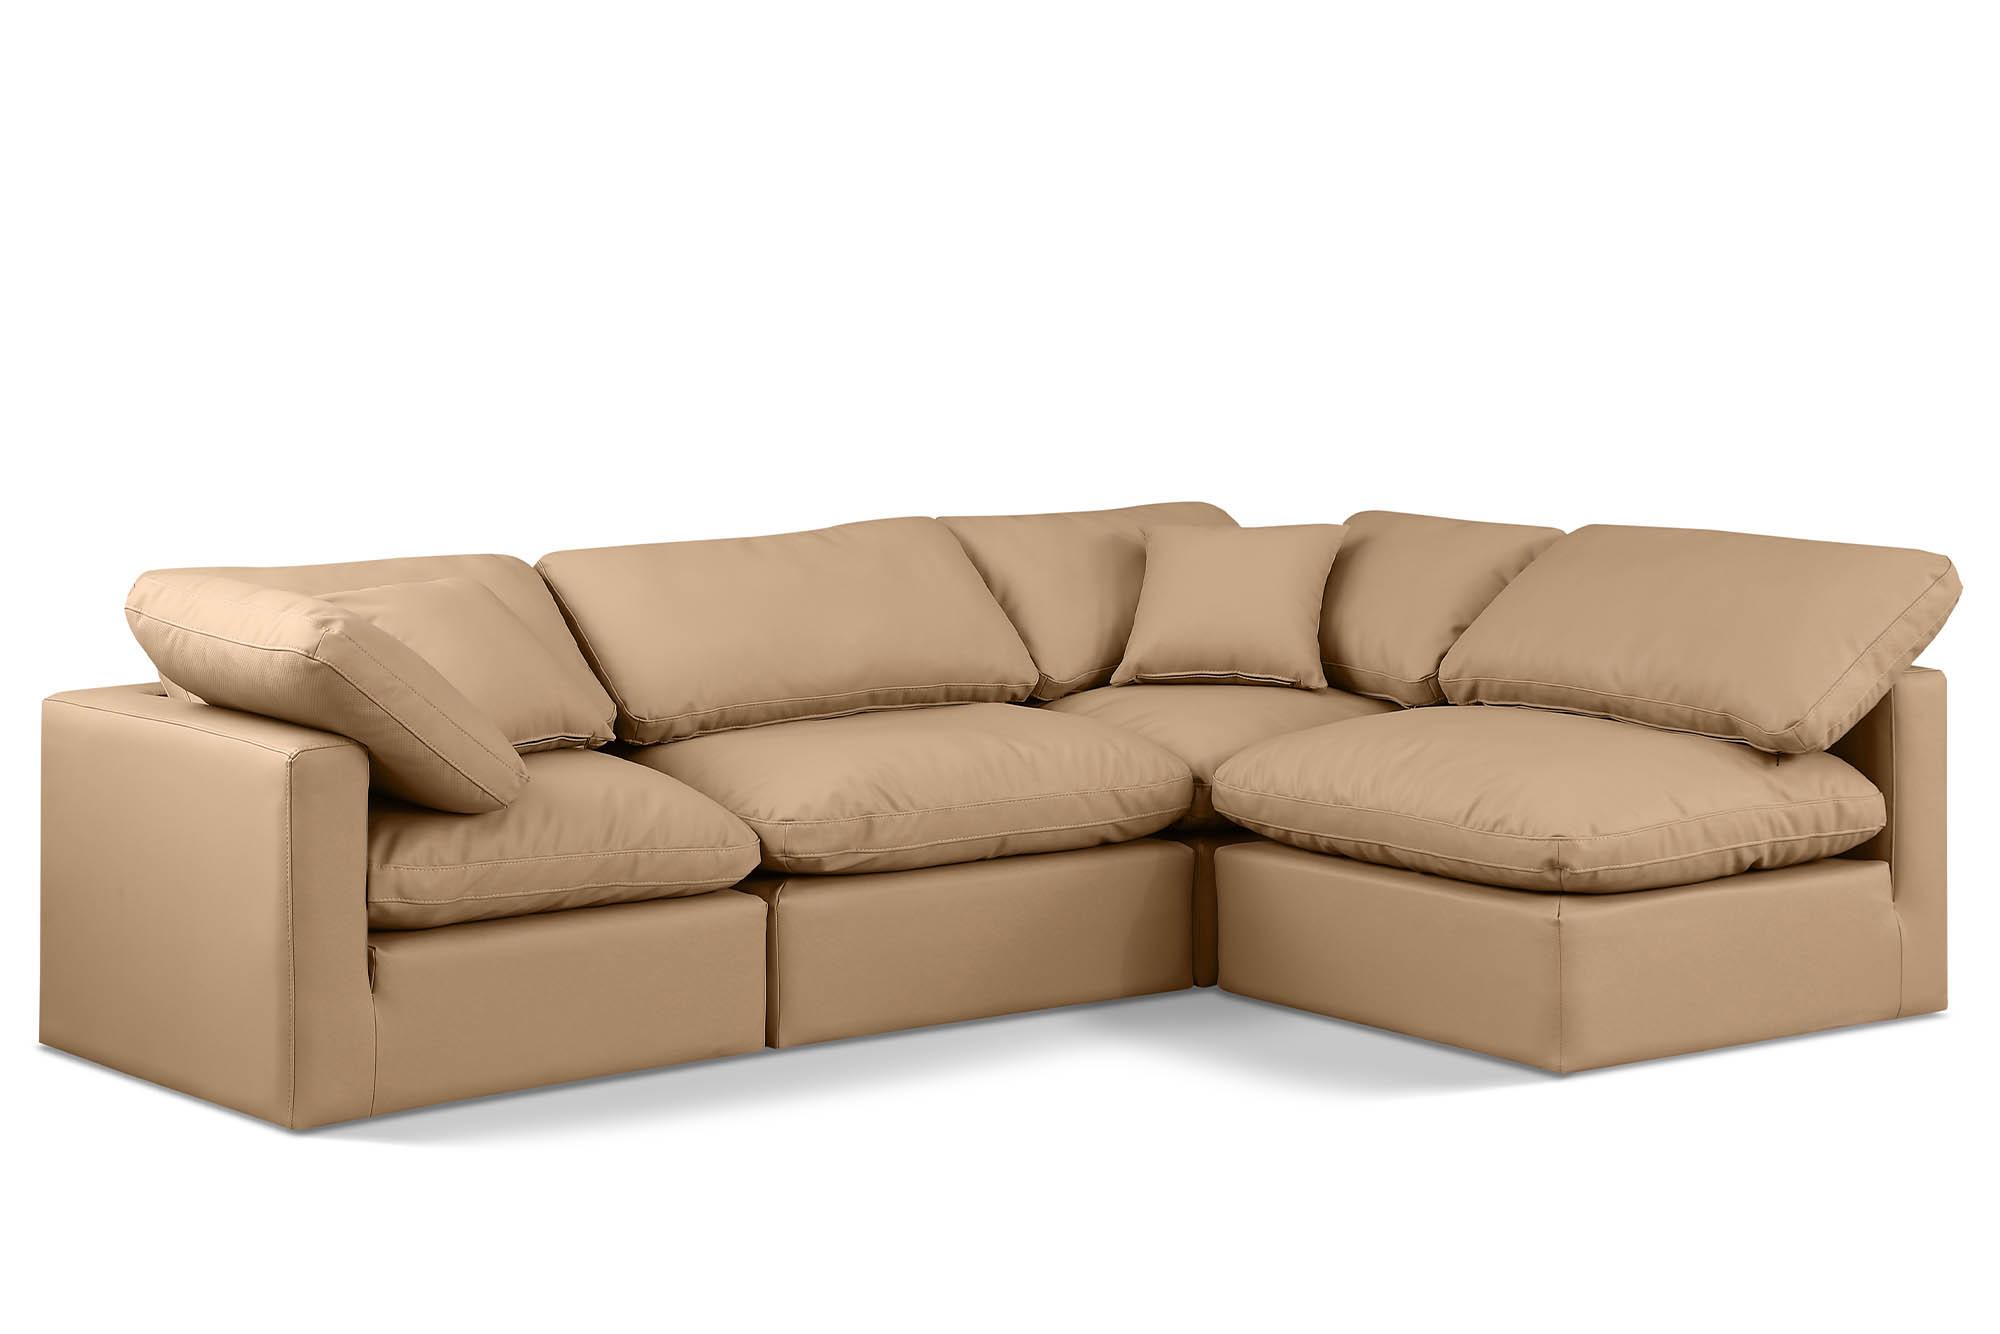 Contemporary, Modern Modular Sectional Sofa INDULGE 146Tan-Sec4B 146Tan-Sec4B in Tan Faux Leather